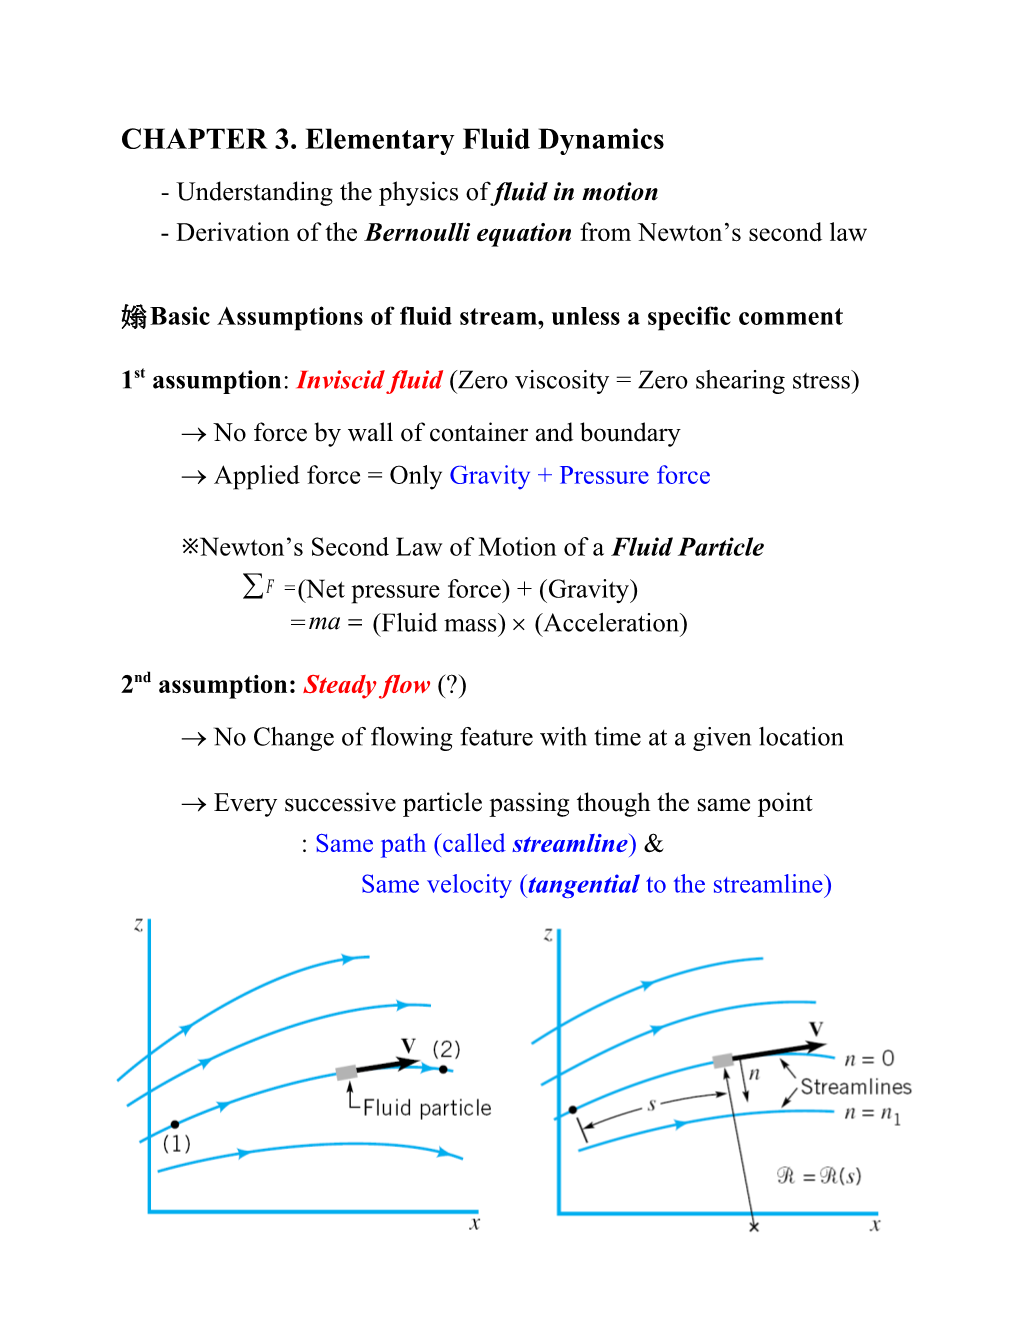 Chapter 3 Elementary Fluid Dynamics- the Bernoulli Equation